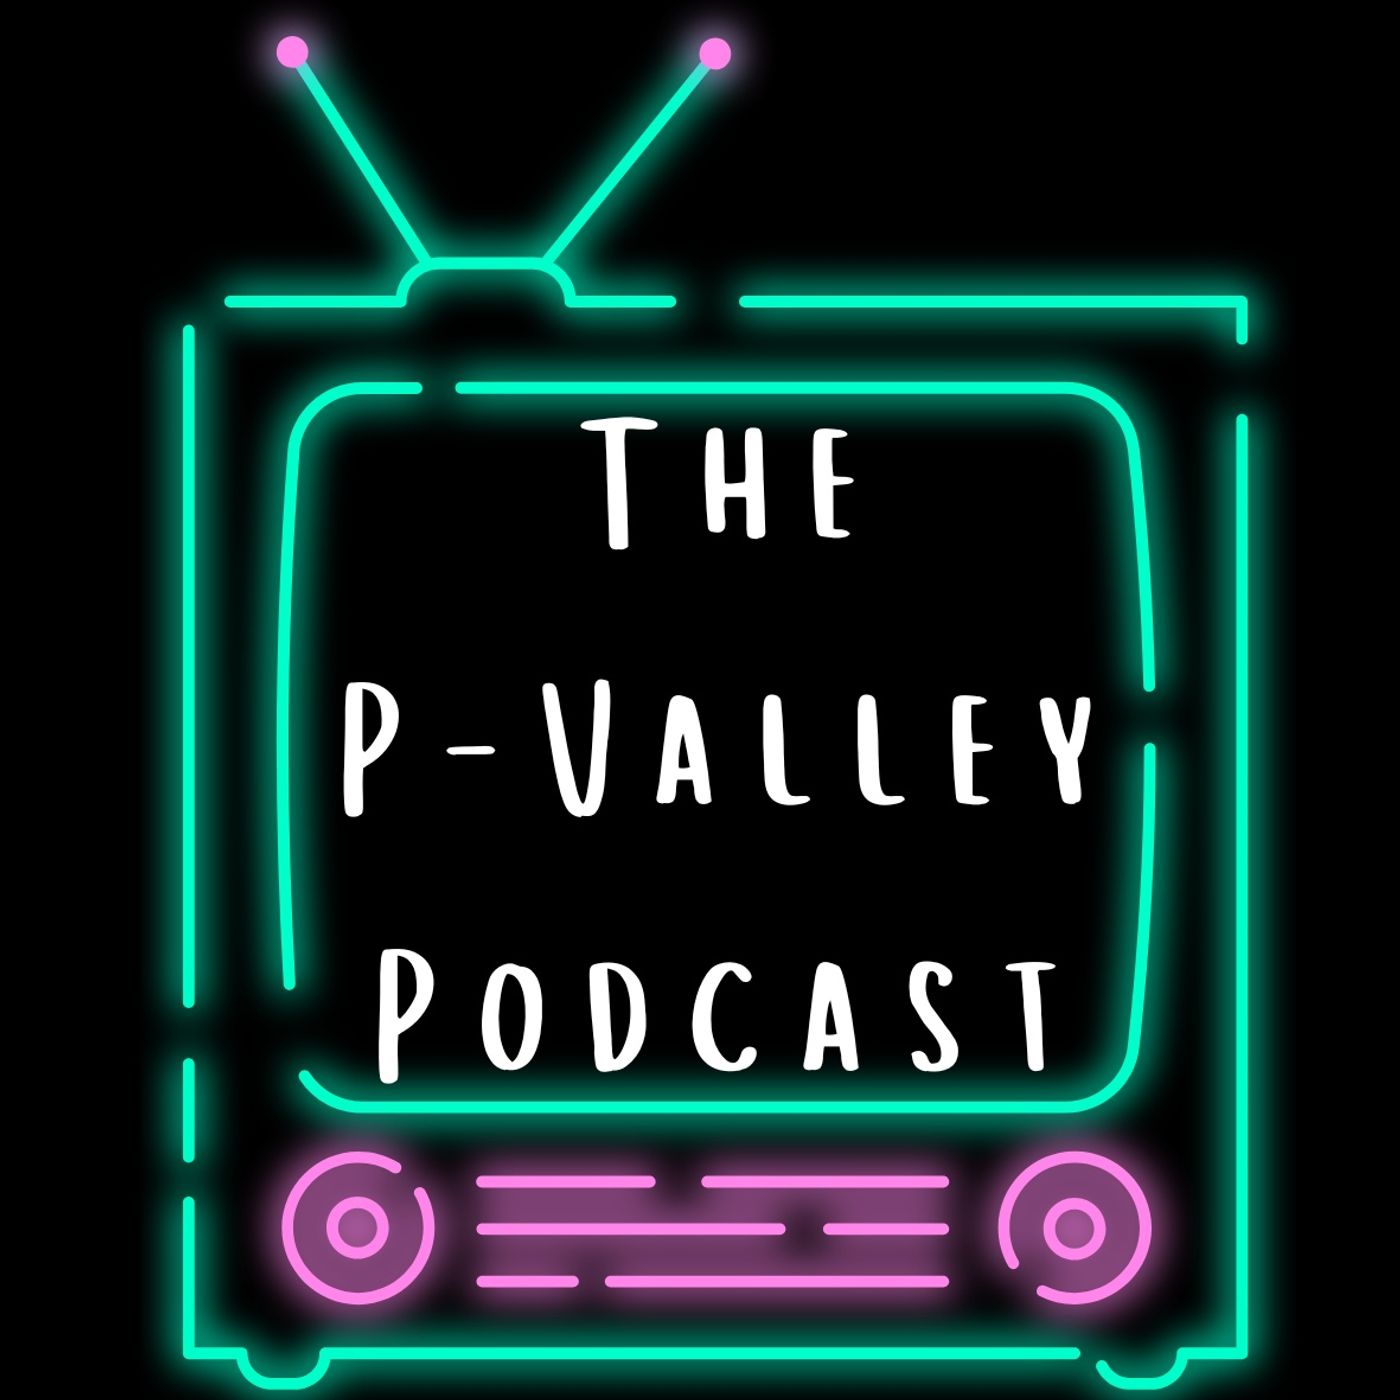 The Valley Episode 6 Recap: Jesse & Michelle Blame Kristen Doute